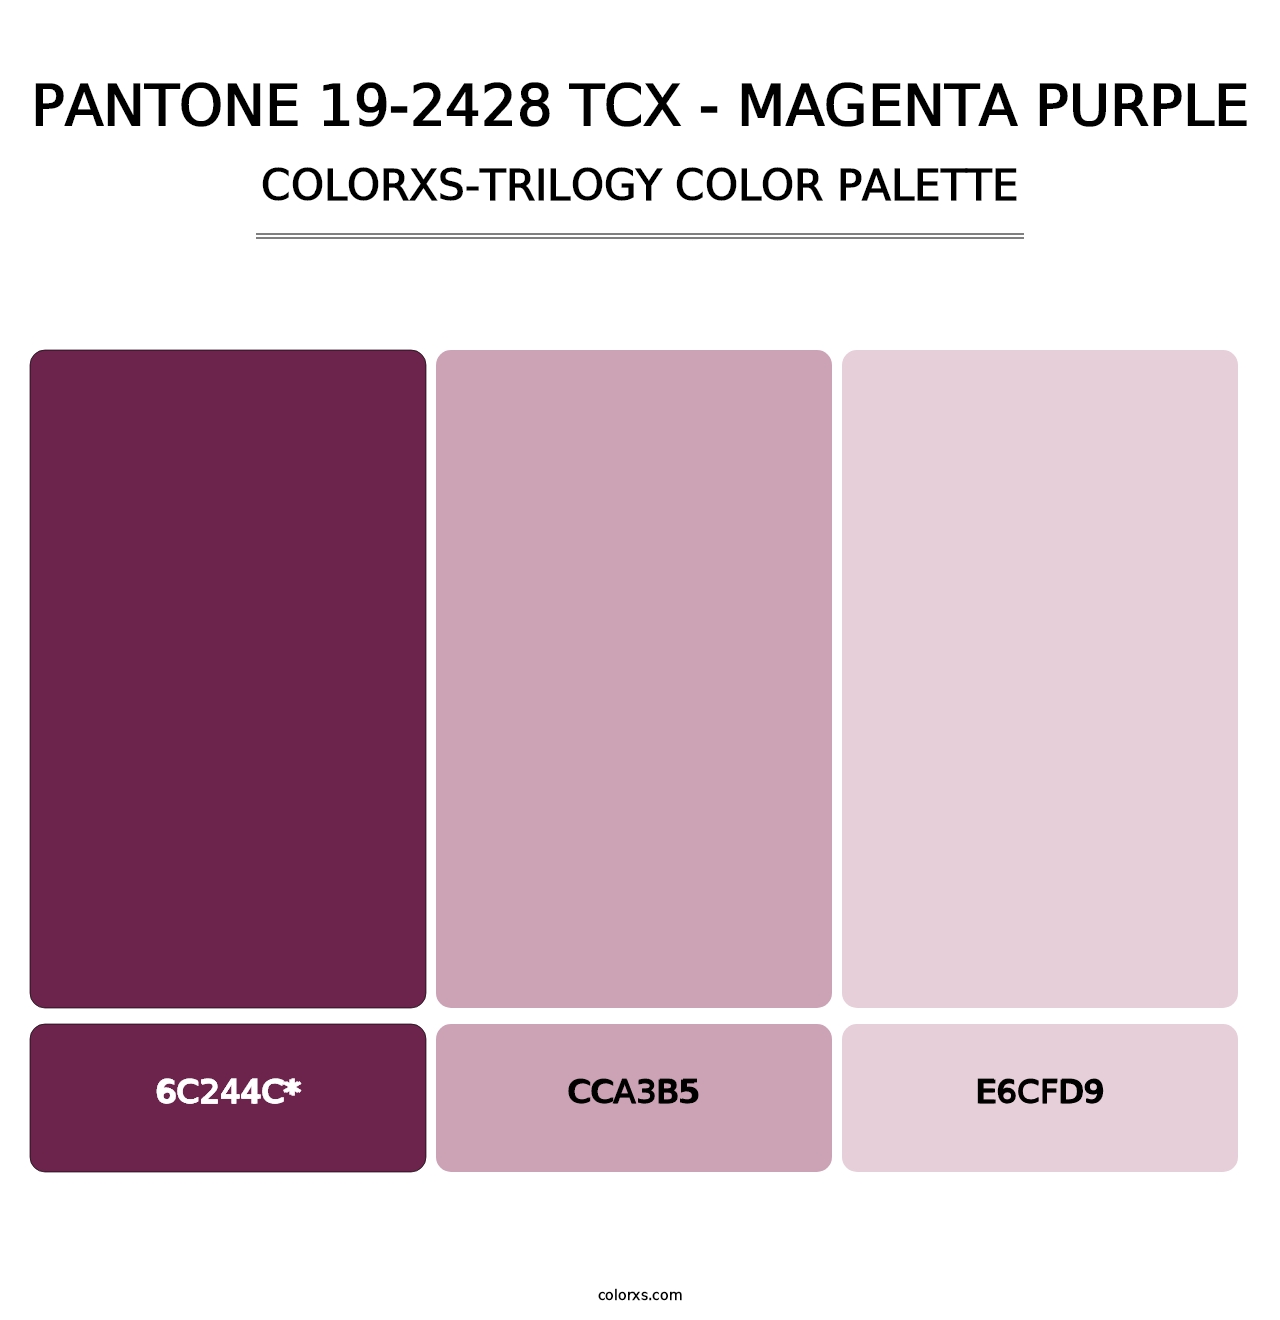 PANTONE 19-2428 TCX - Magenta Purple - Colorxs Trilogy Palette